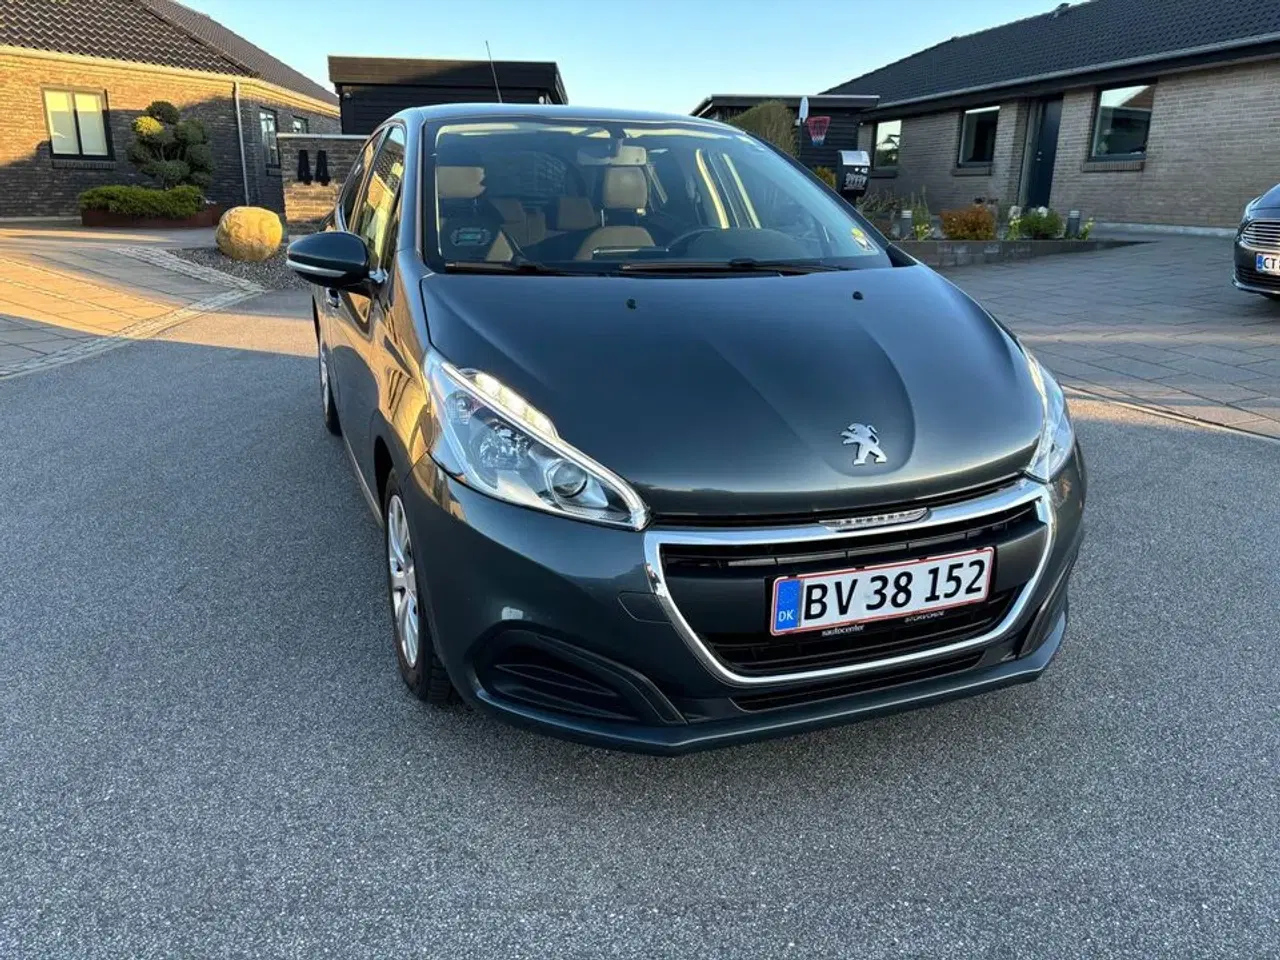 Billede 1 - 2018 Peugeot 208 bluehdi 100 hk